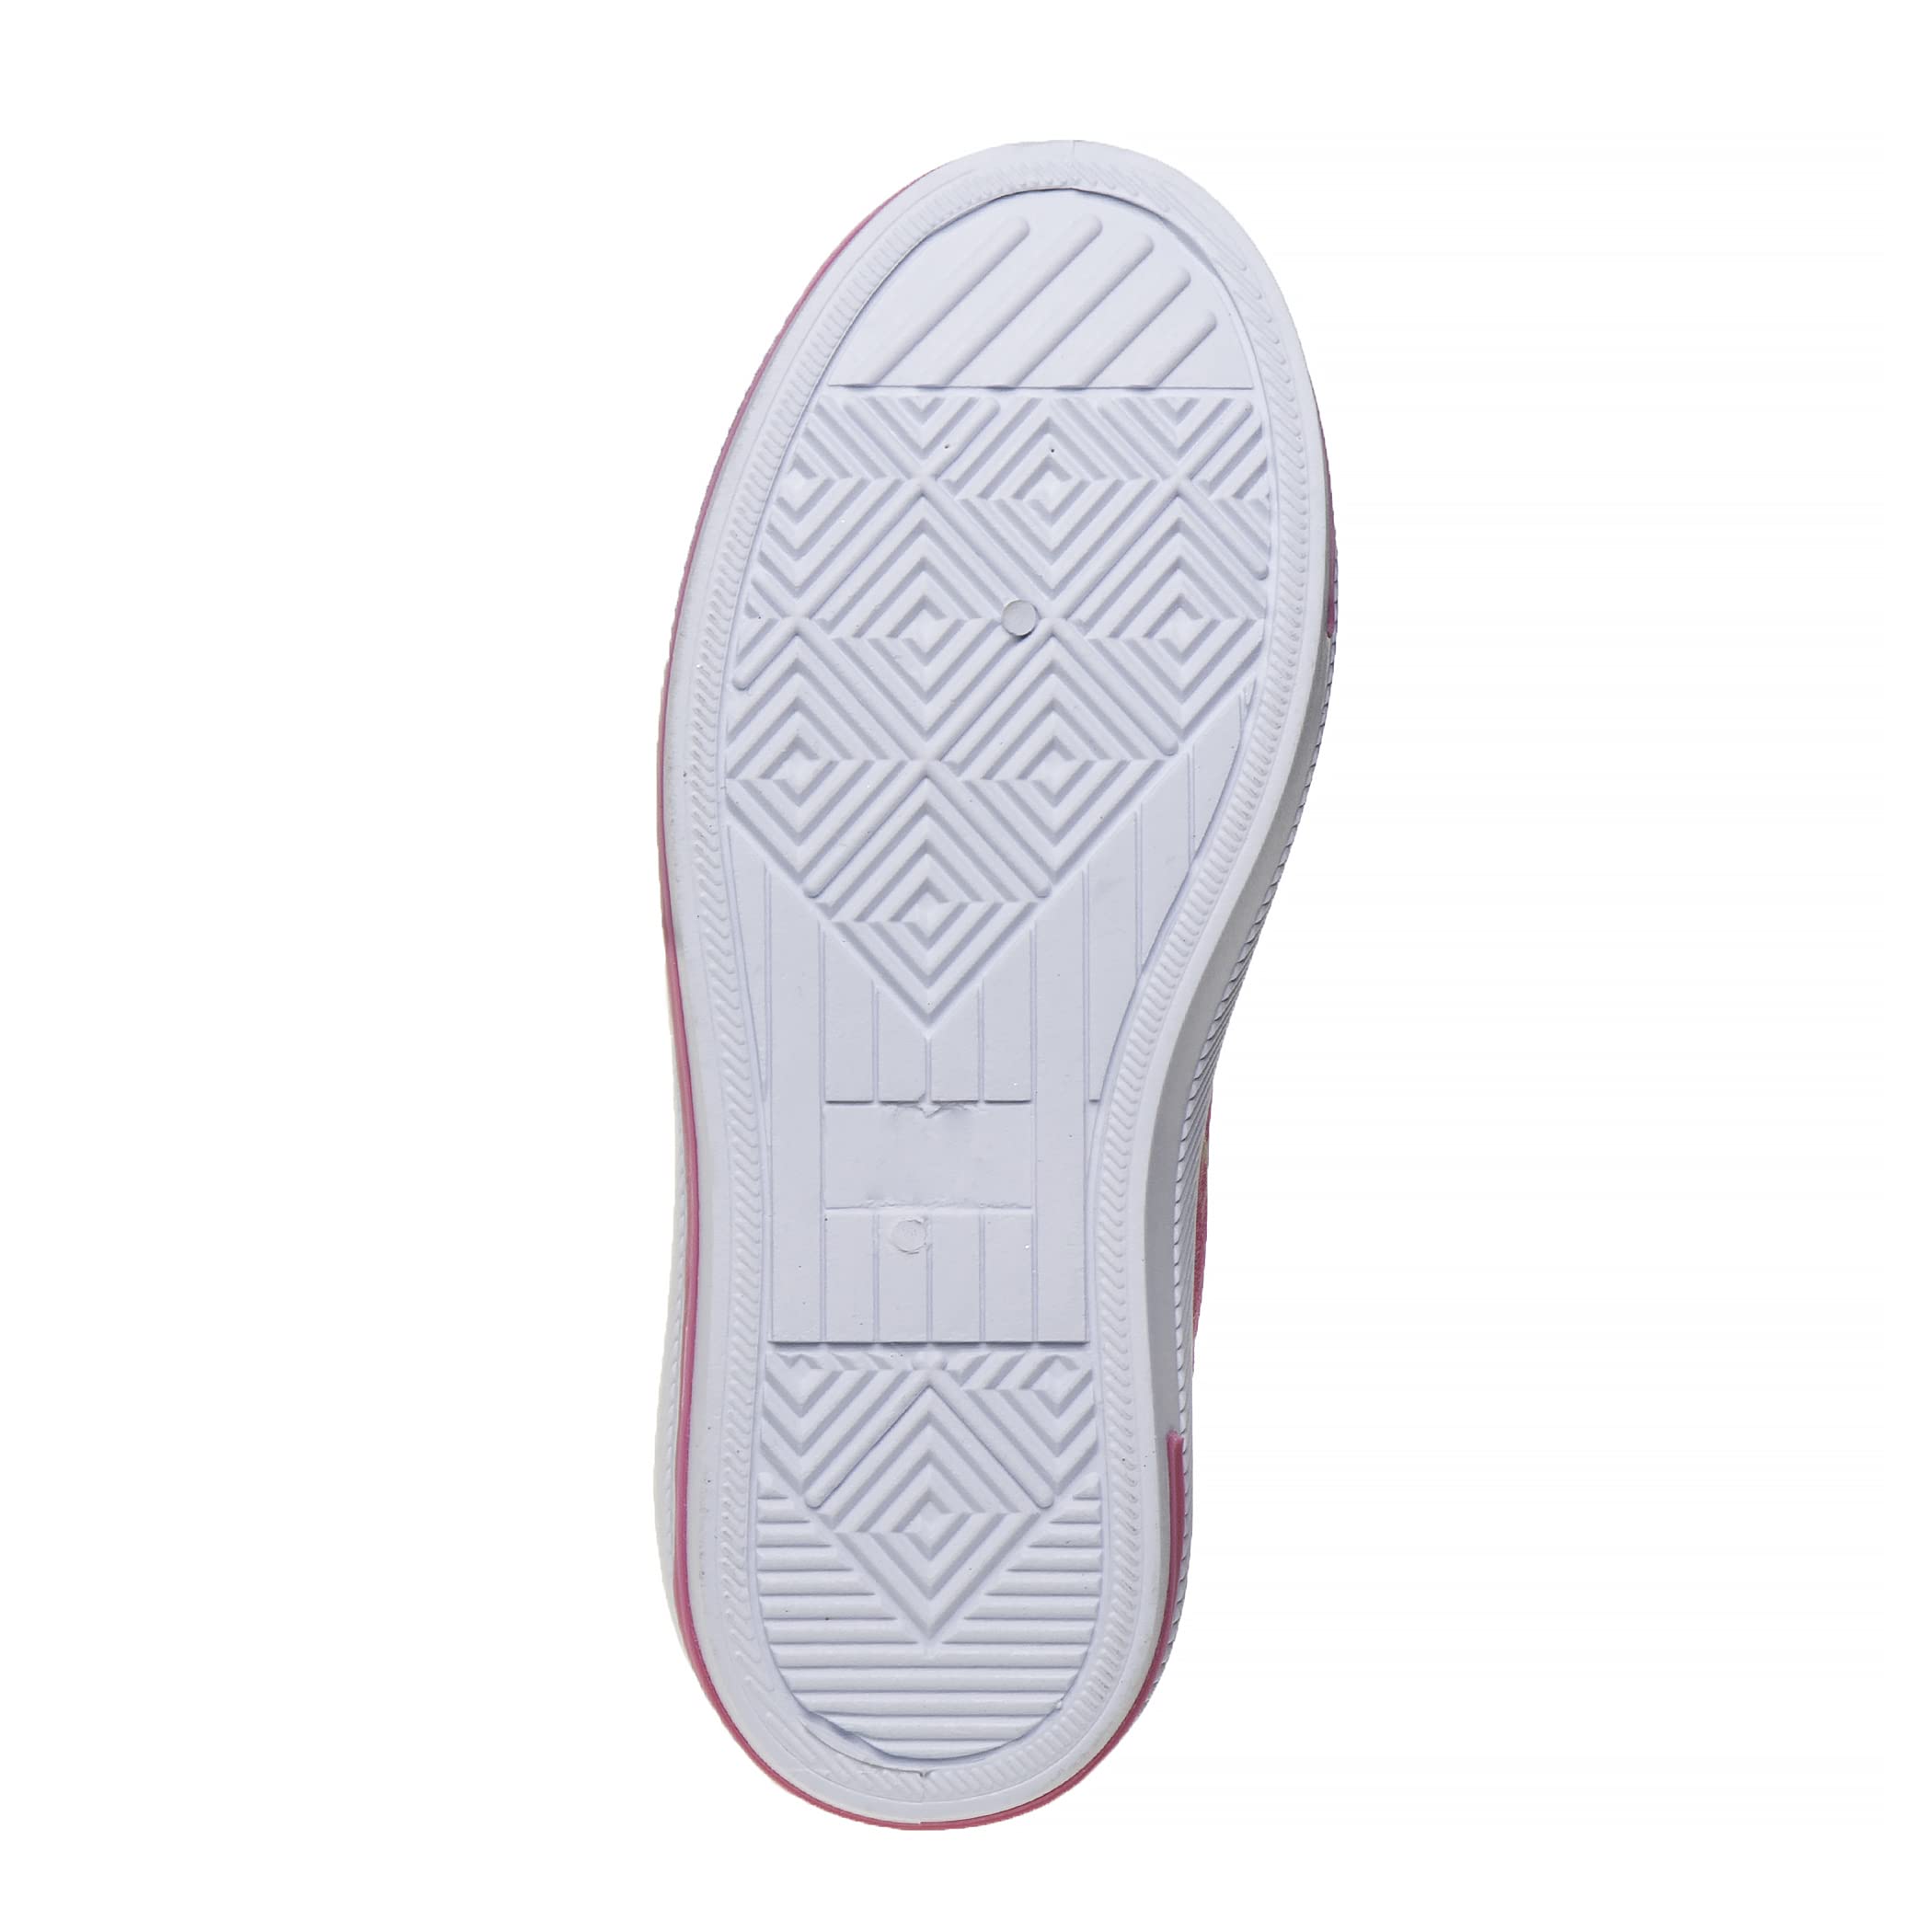 Kensie Girl Sneakers-Low Top Casual Canvas Shoes Slip on Lace Up Multicolor Tennis (Little Big Kid US Medium)